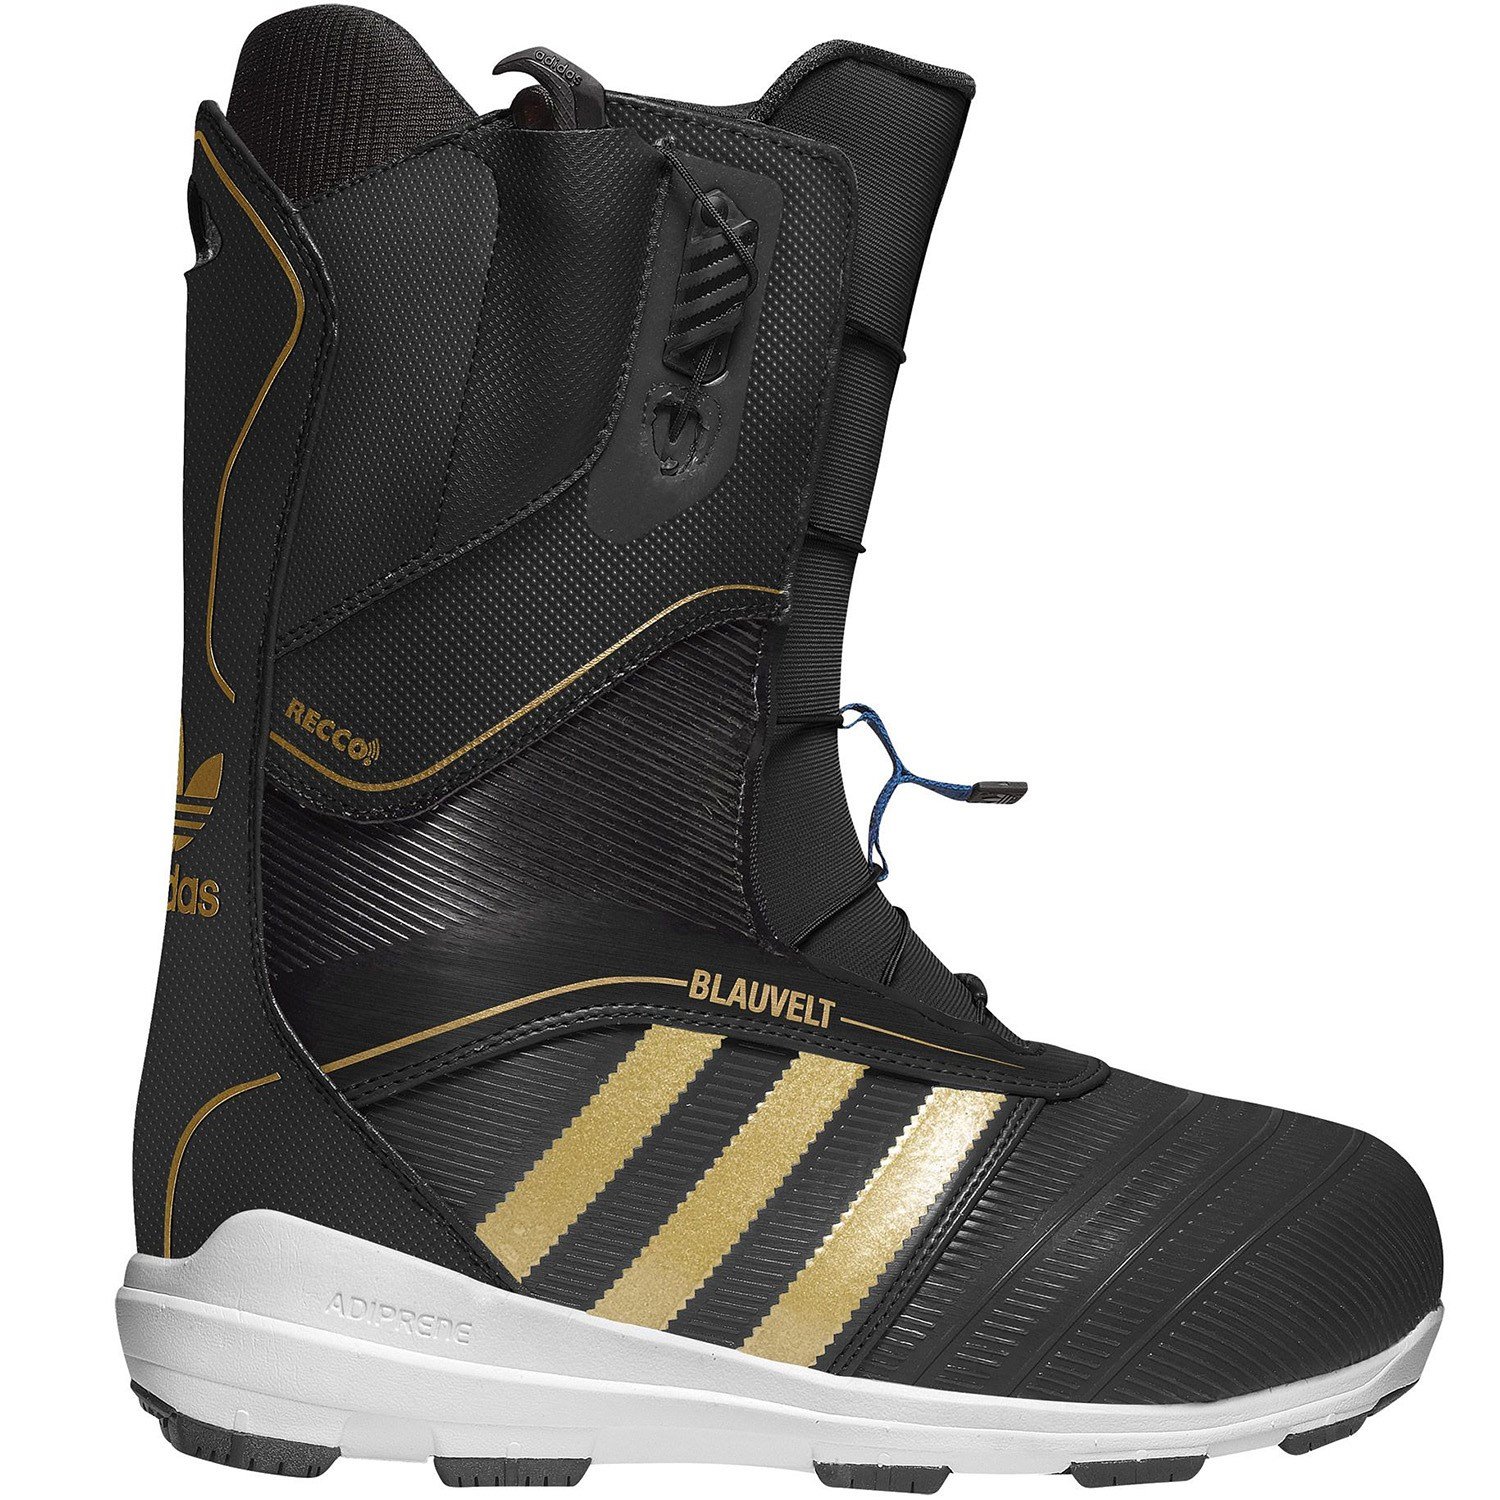 Adidas Blauvelt Snowboard Boots 2015 | evo